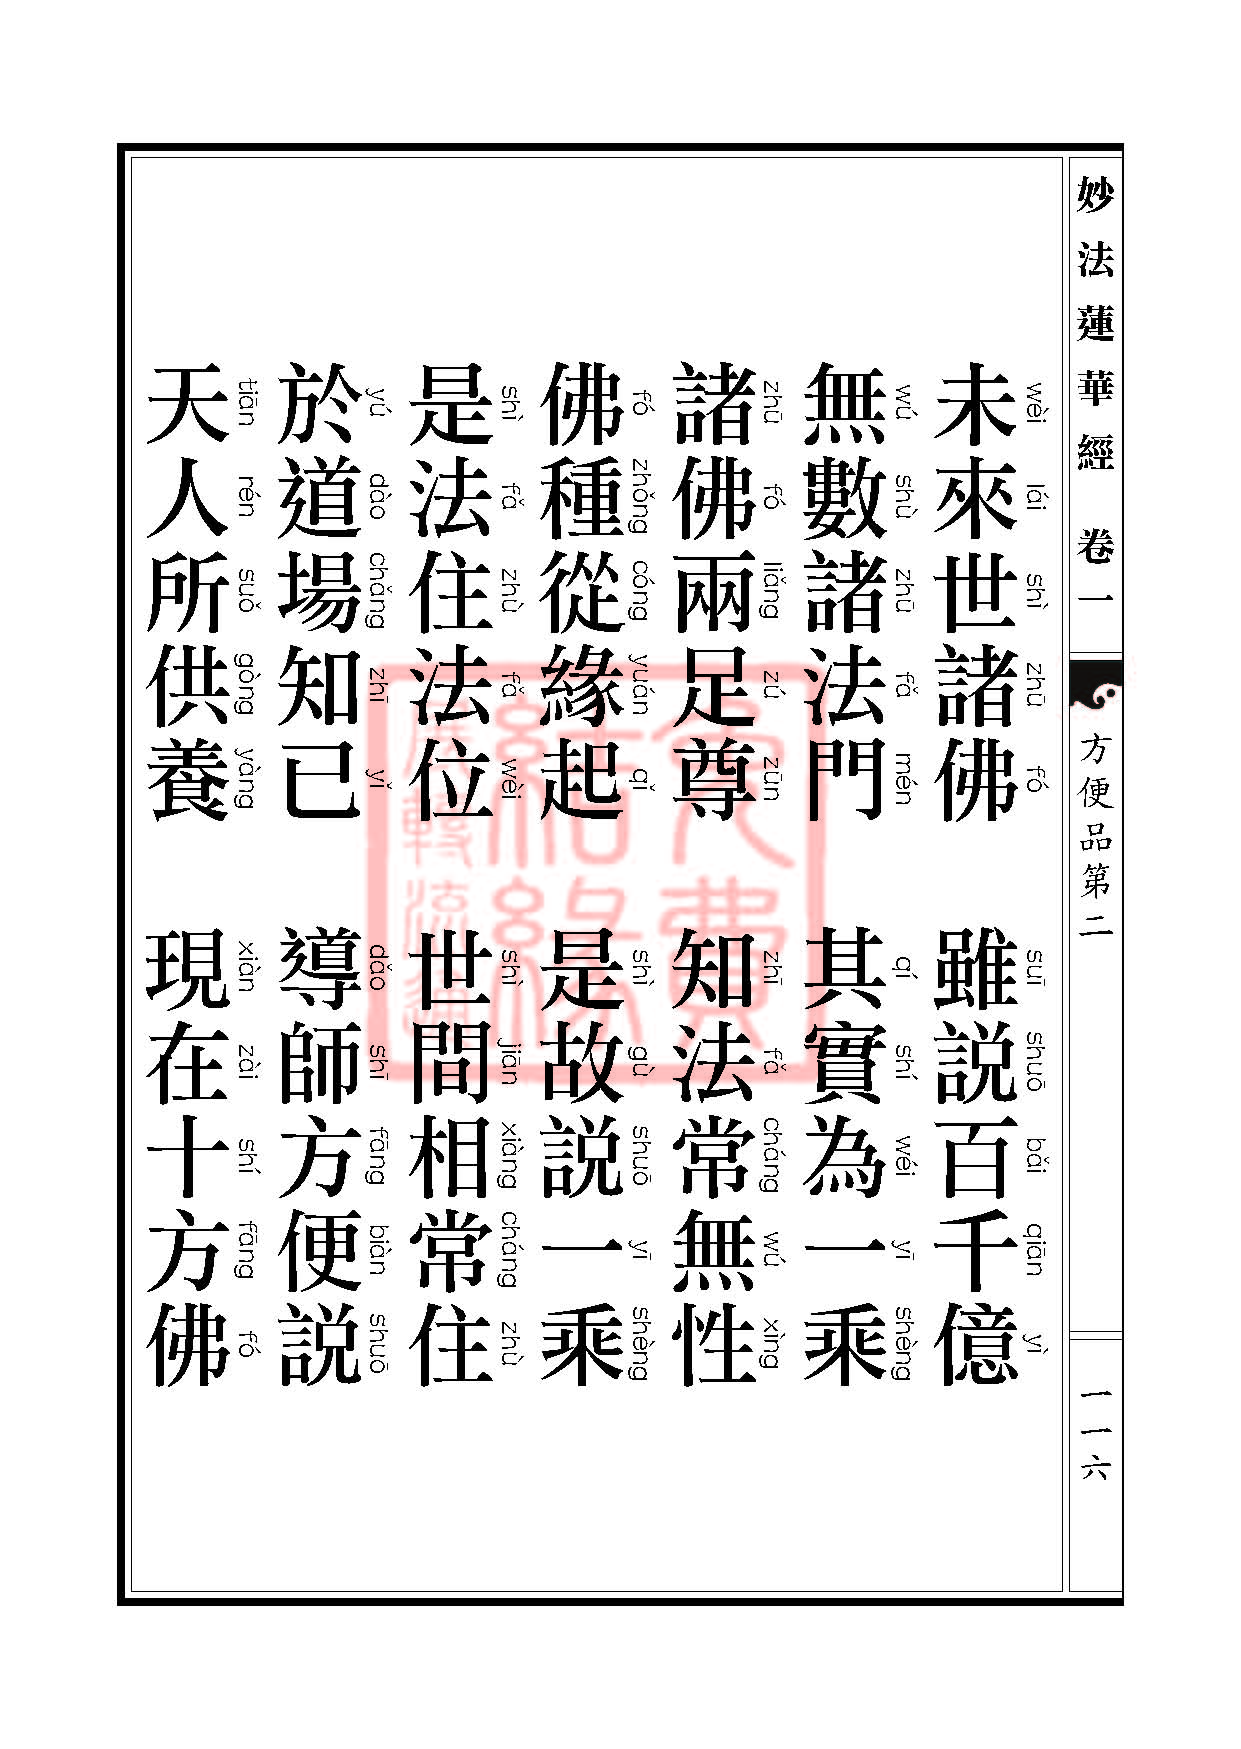 Book_FHJ_HK-A6-PY_Web_页面_116.jpg